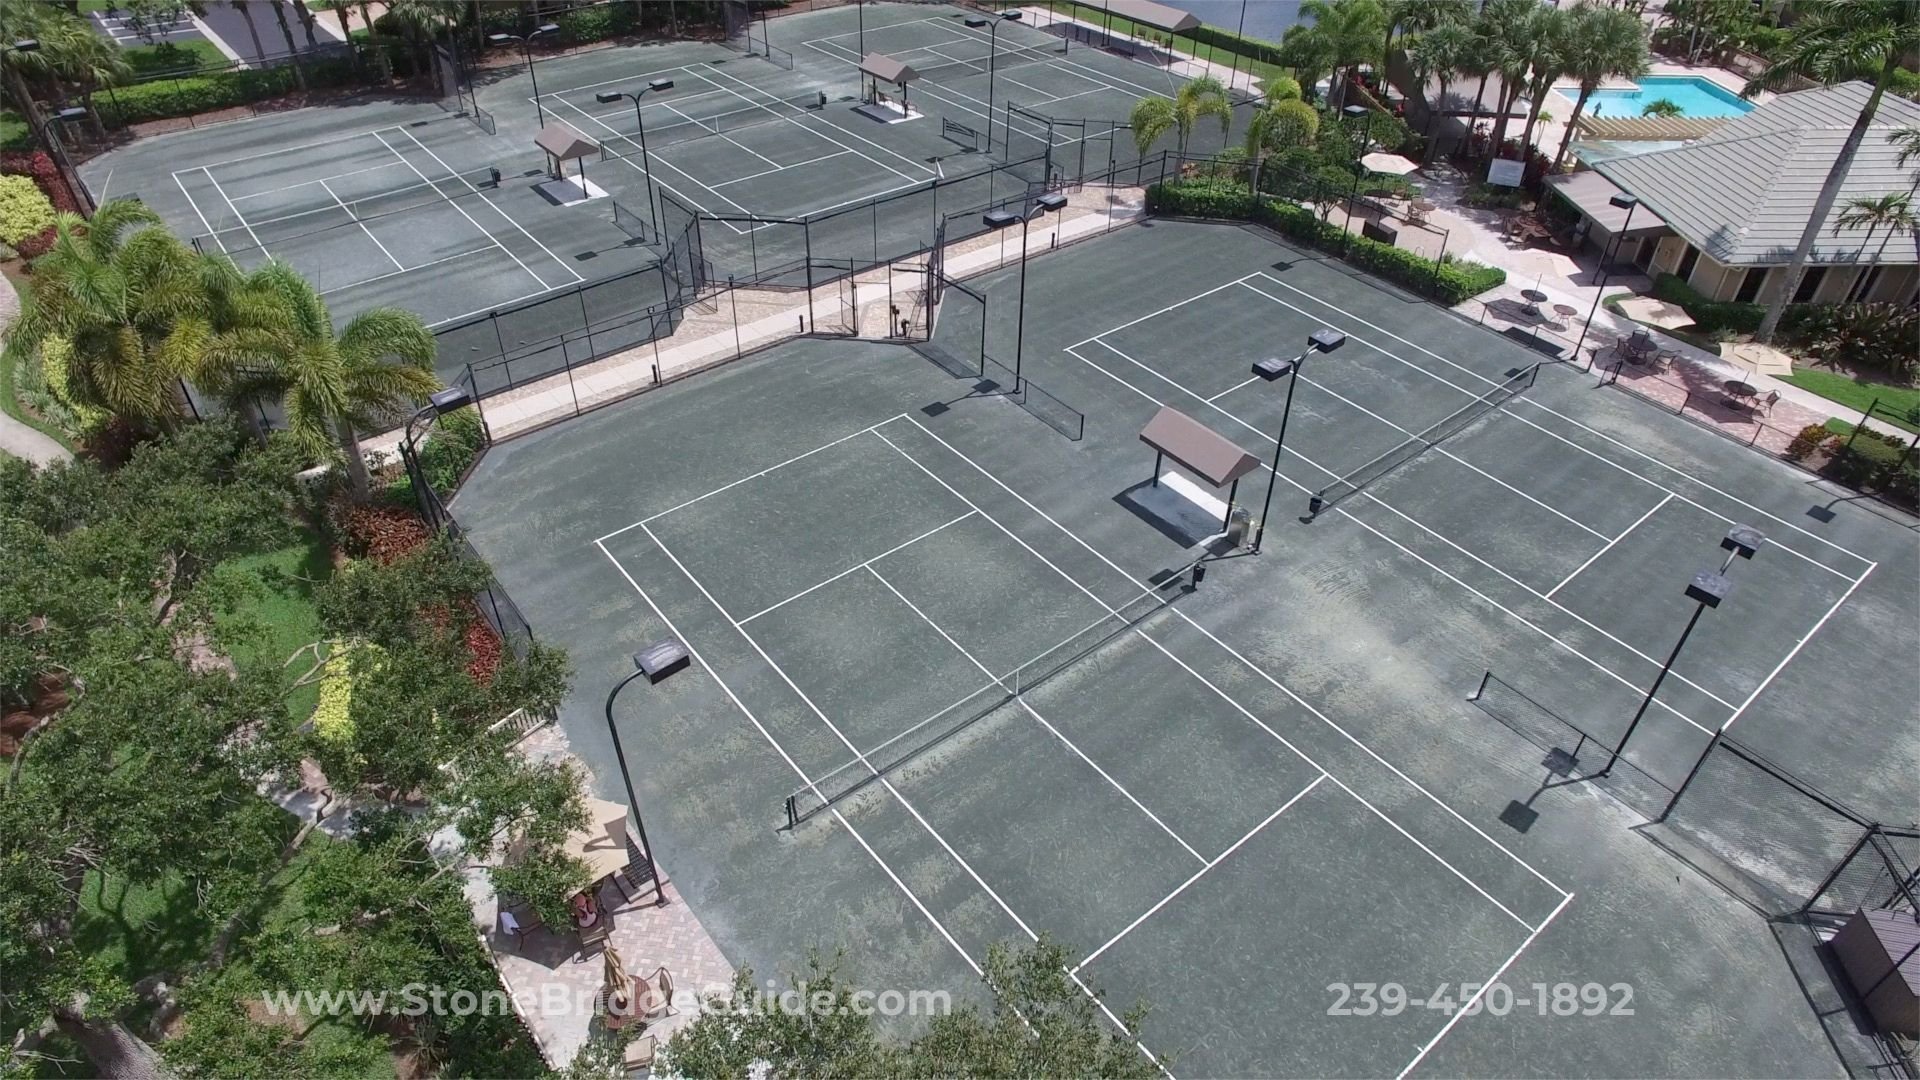 Stonebridge Country Club Tennis Courts.jpeg